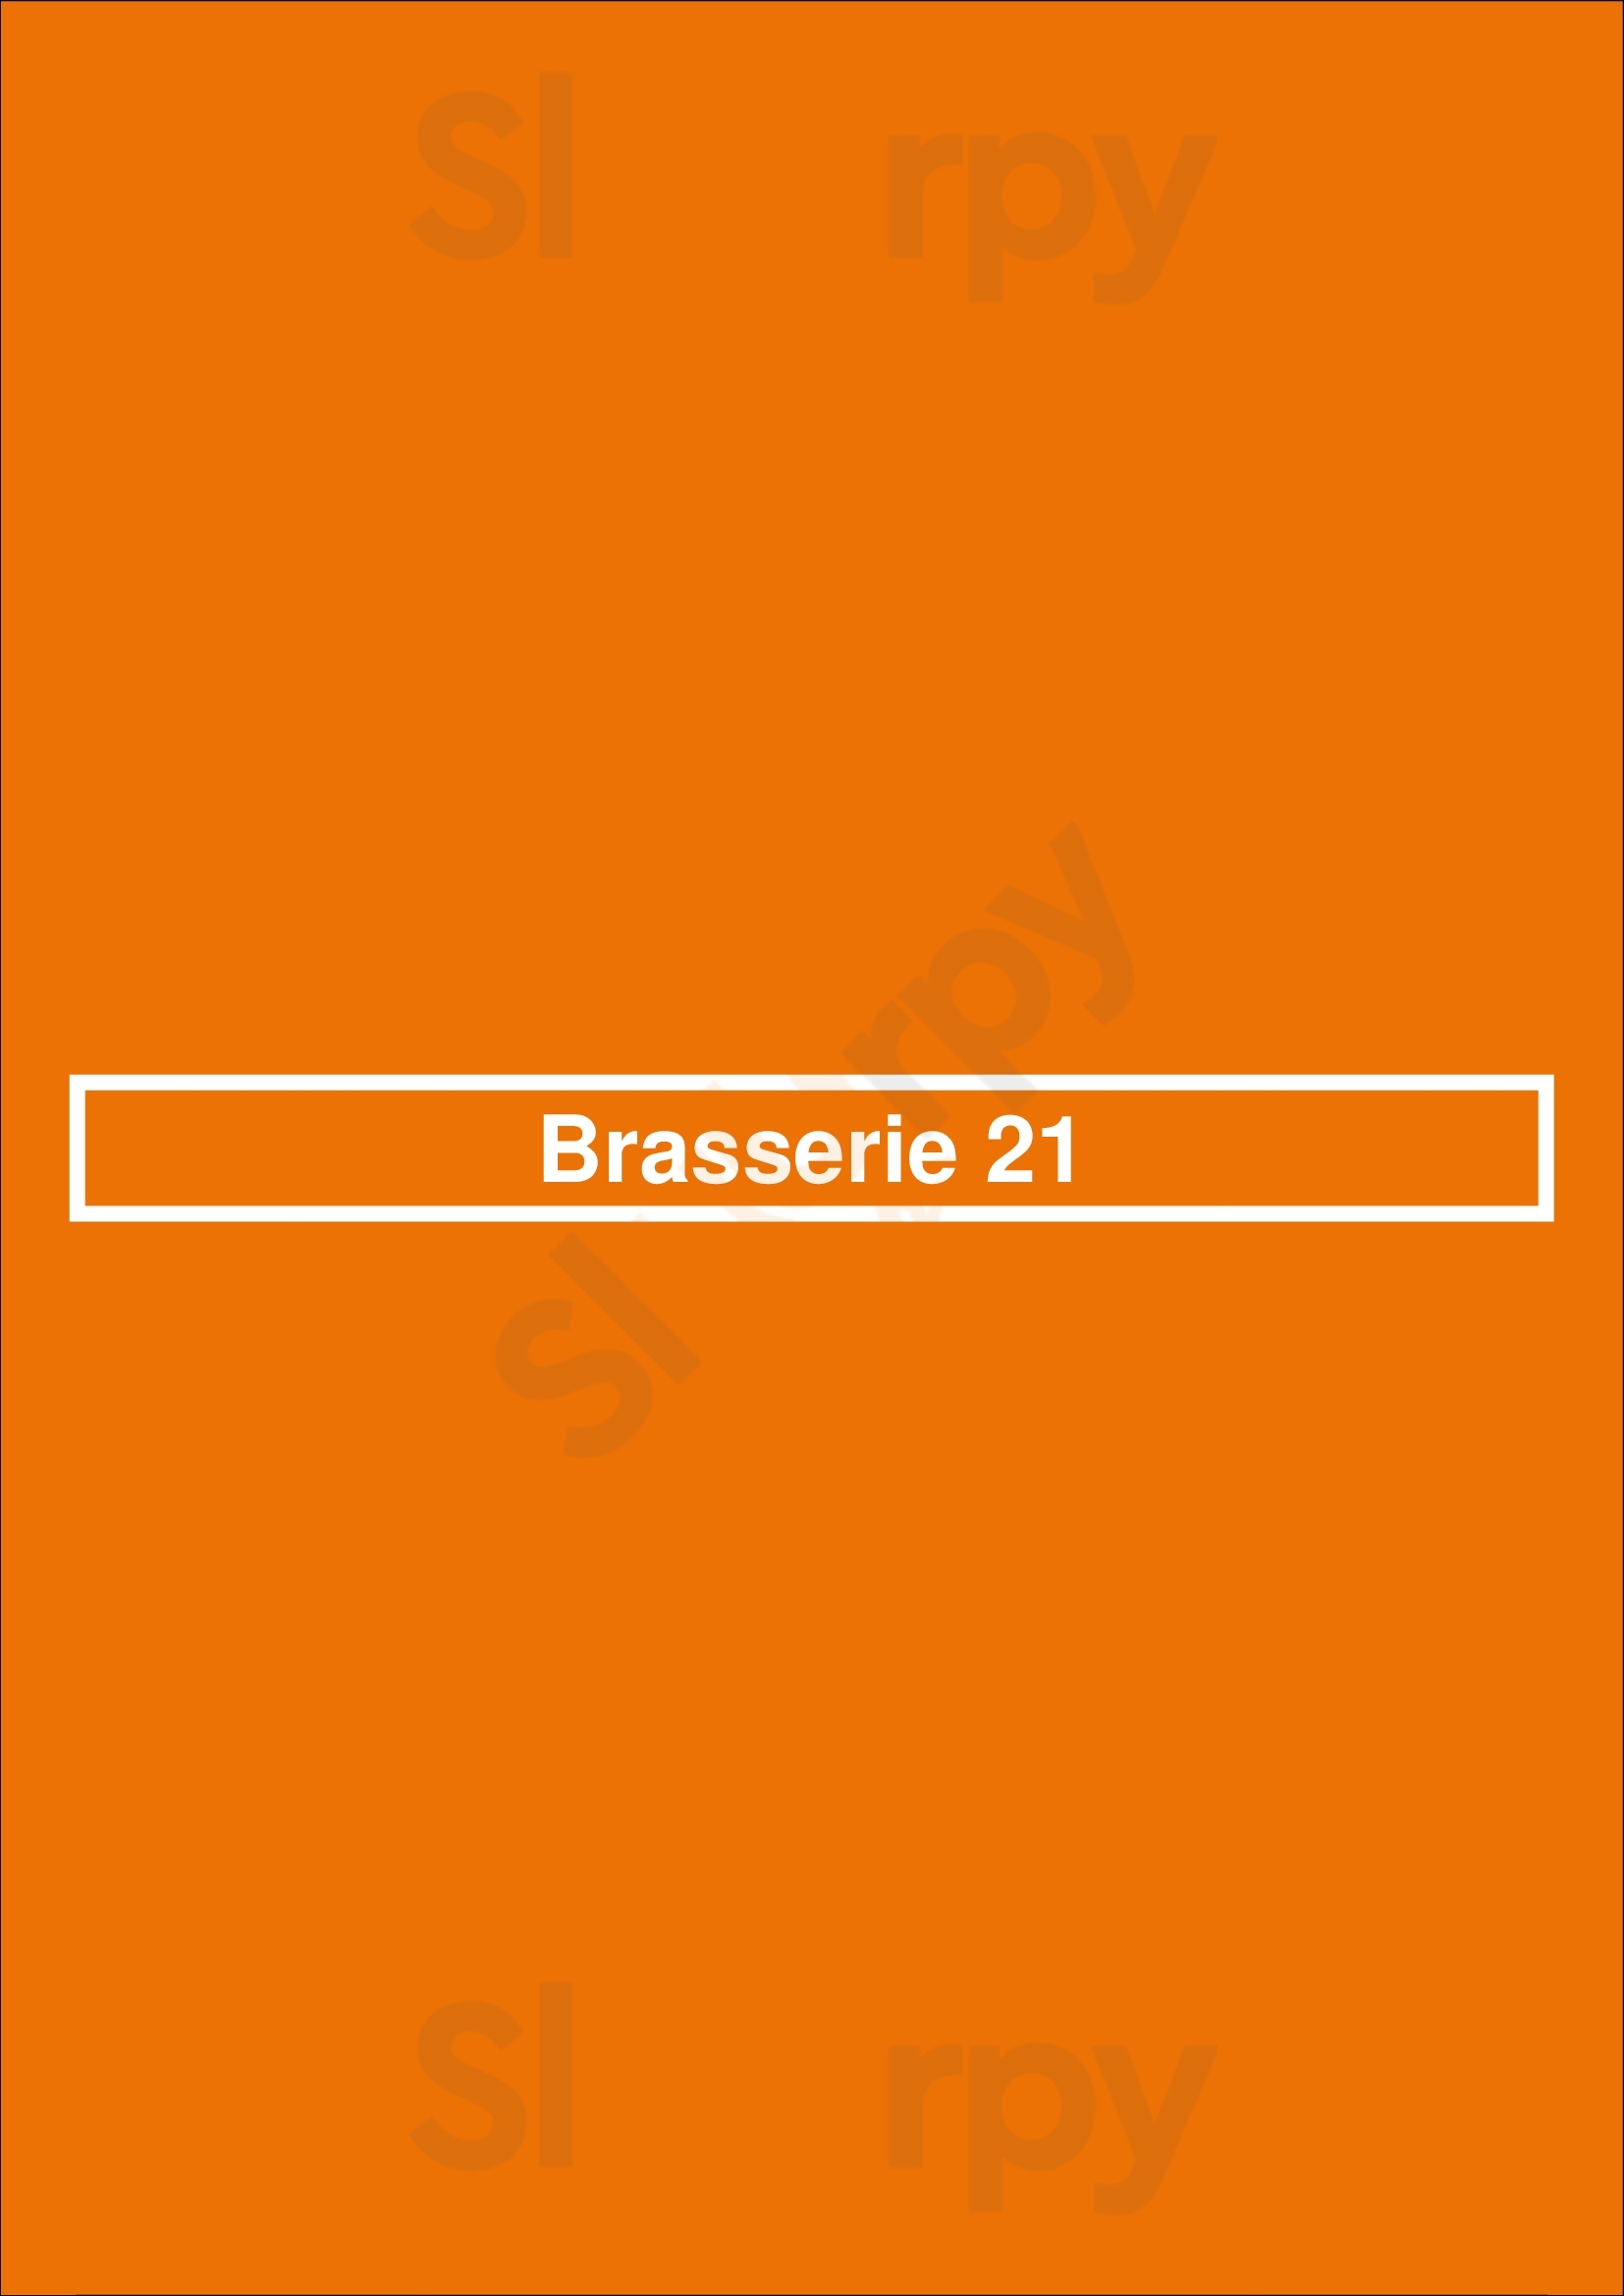 Brasserie 21 Assen Menu - 1